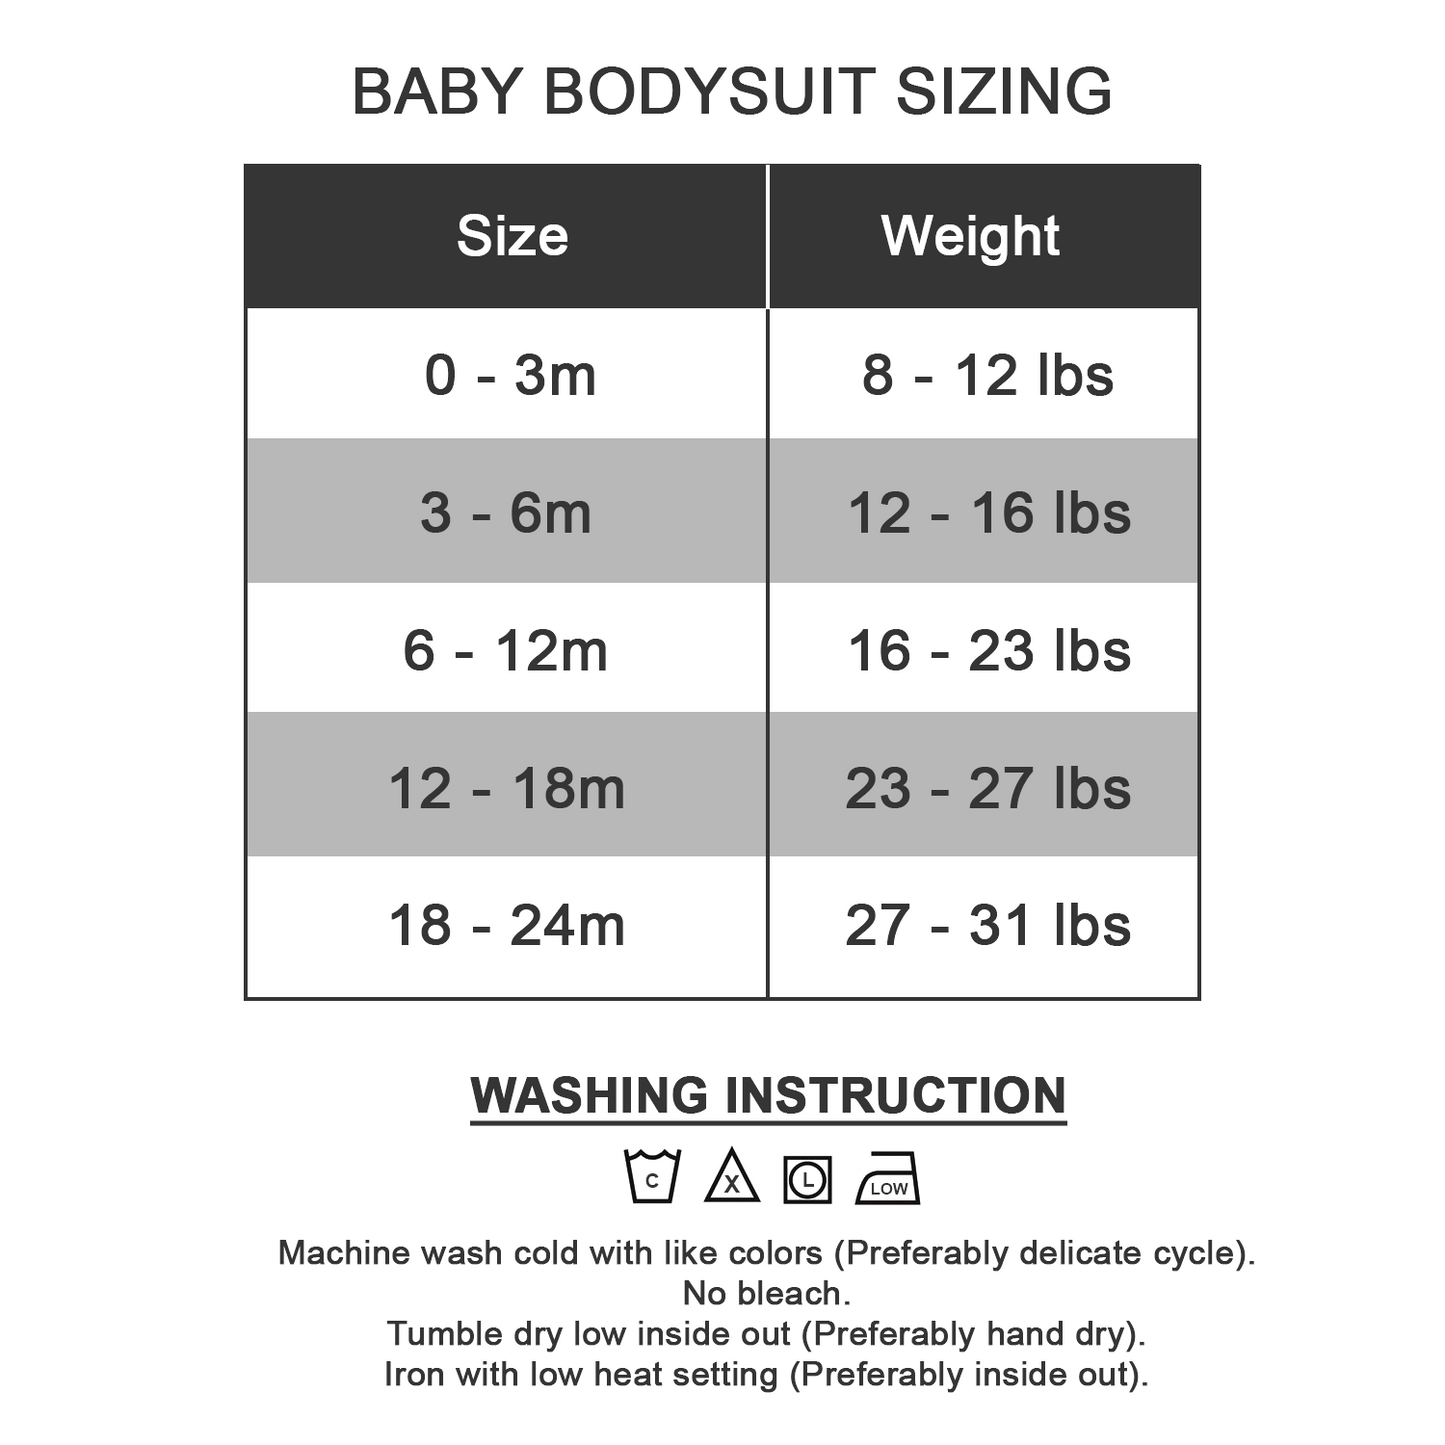 [Personalized] Endanzoo Organic Baby Bodysuit - Hello World